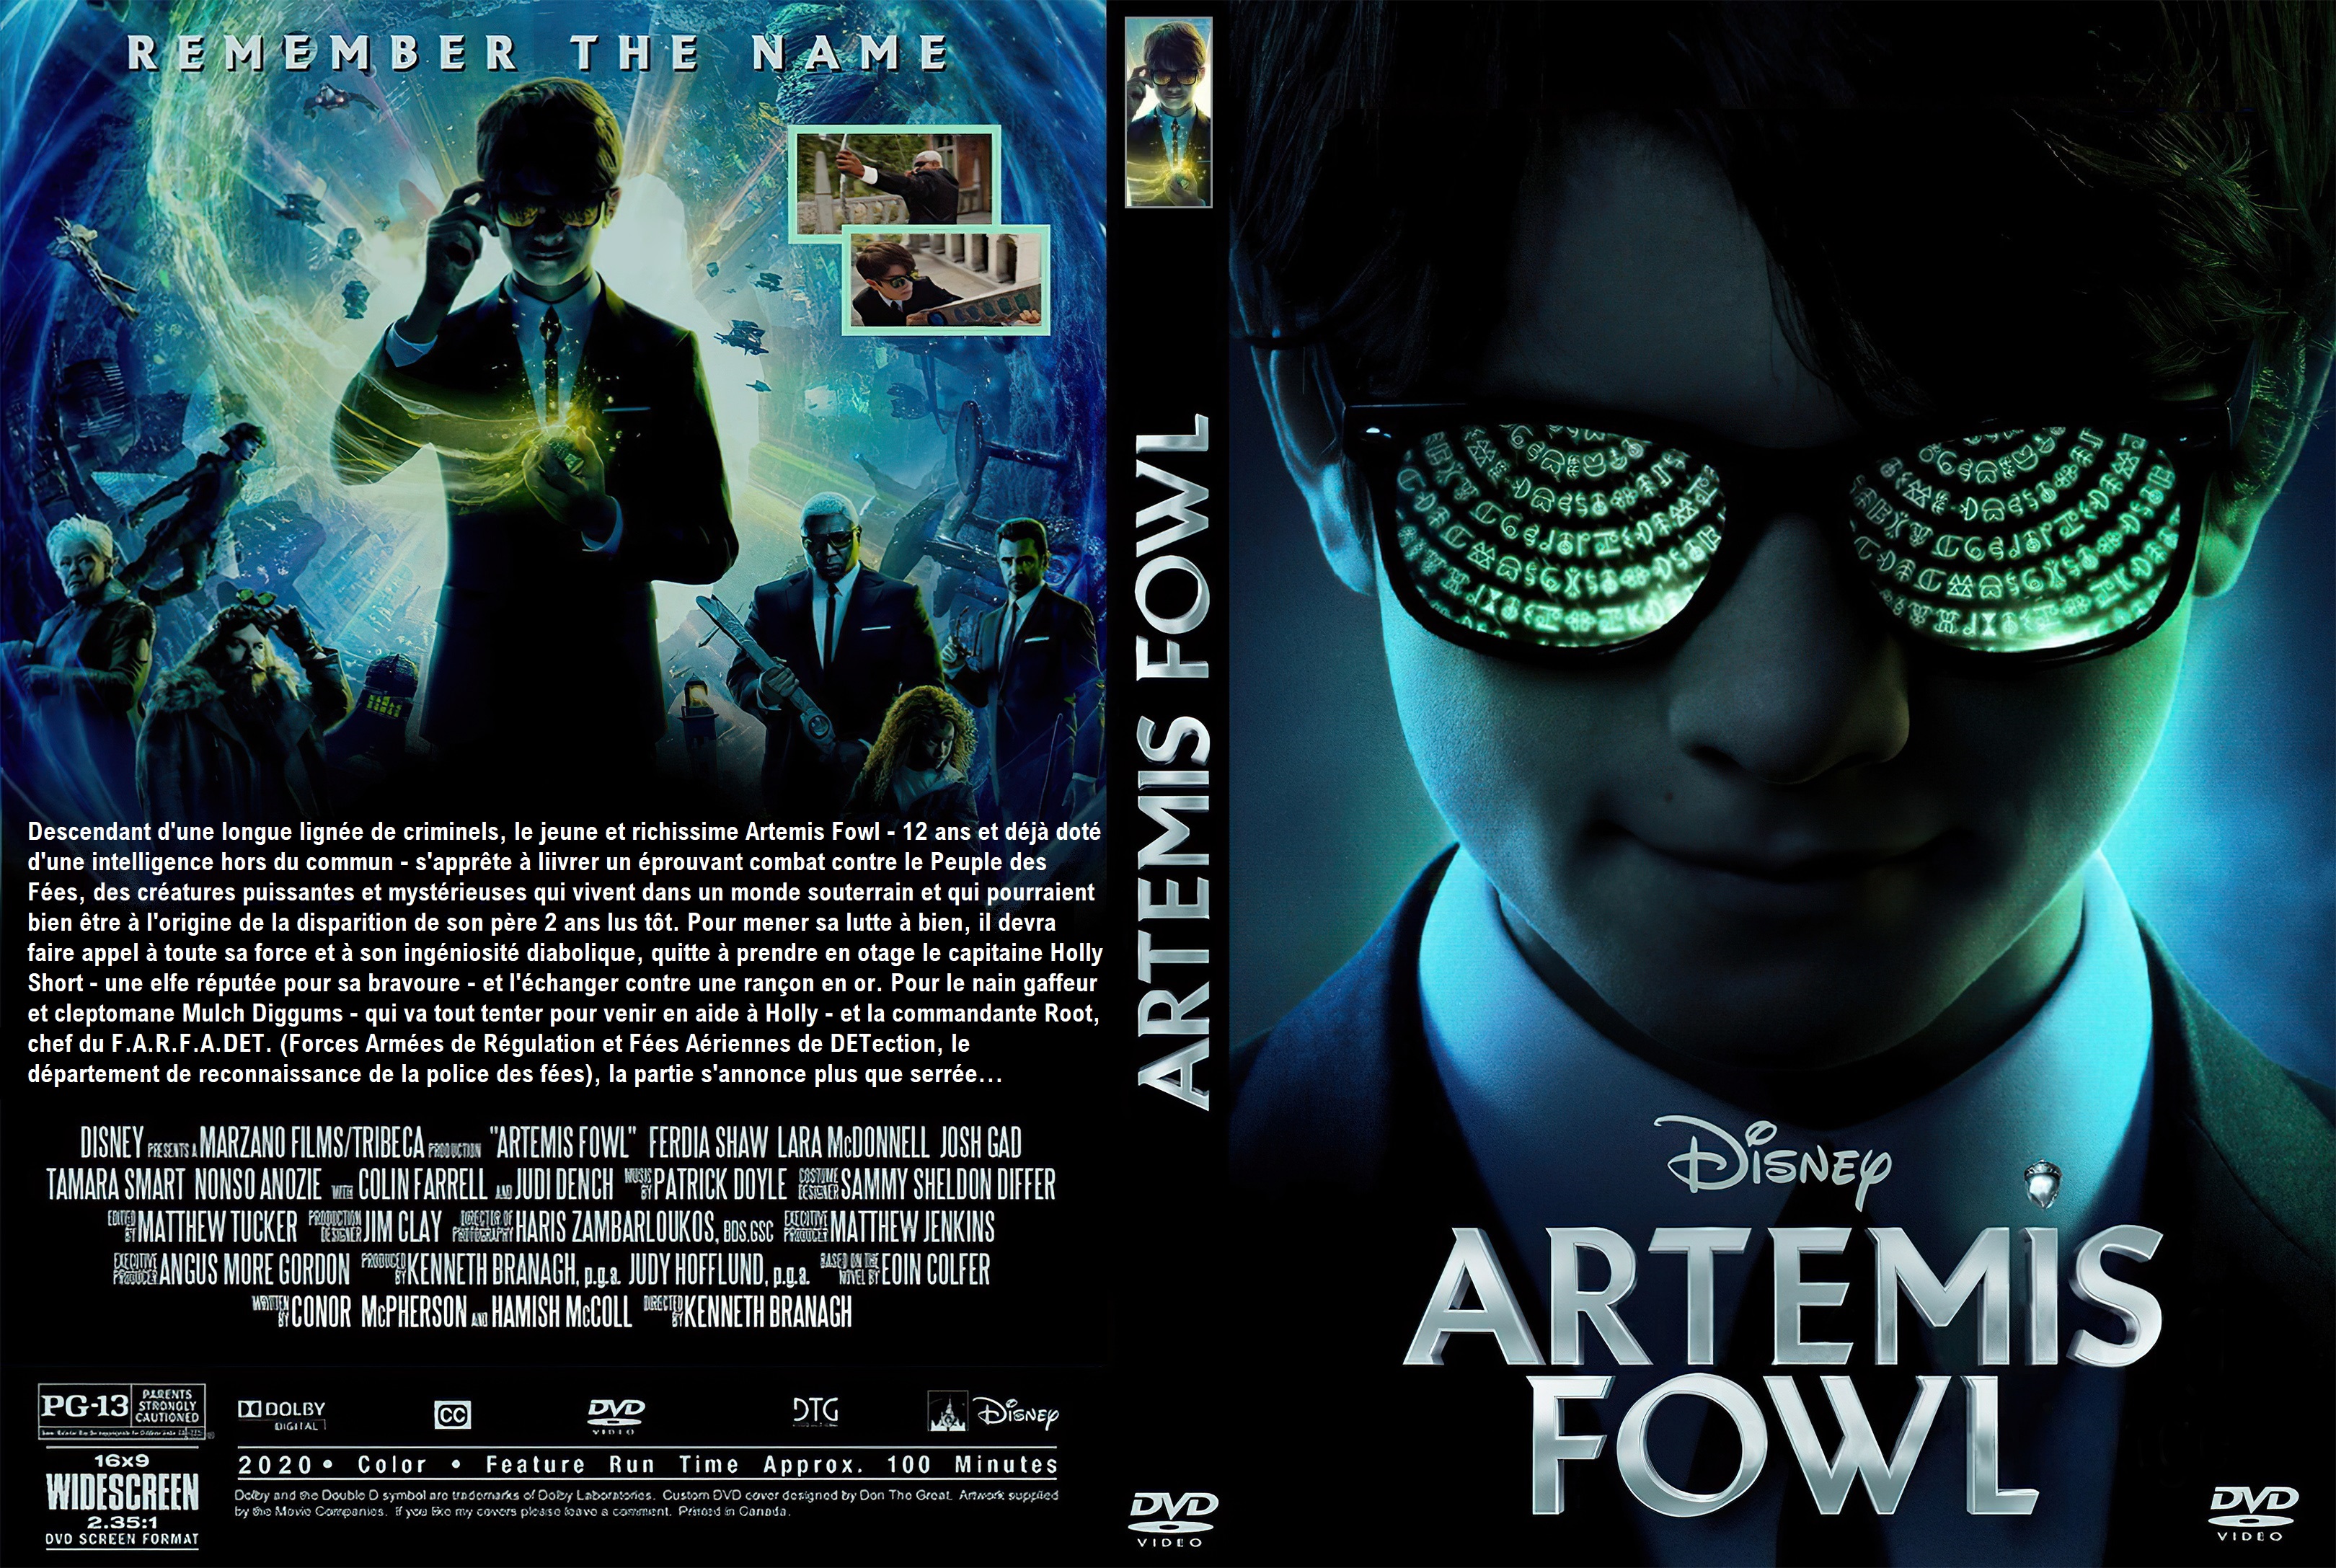 Jaquette DVD Artemis Fowl custom